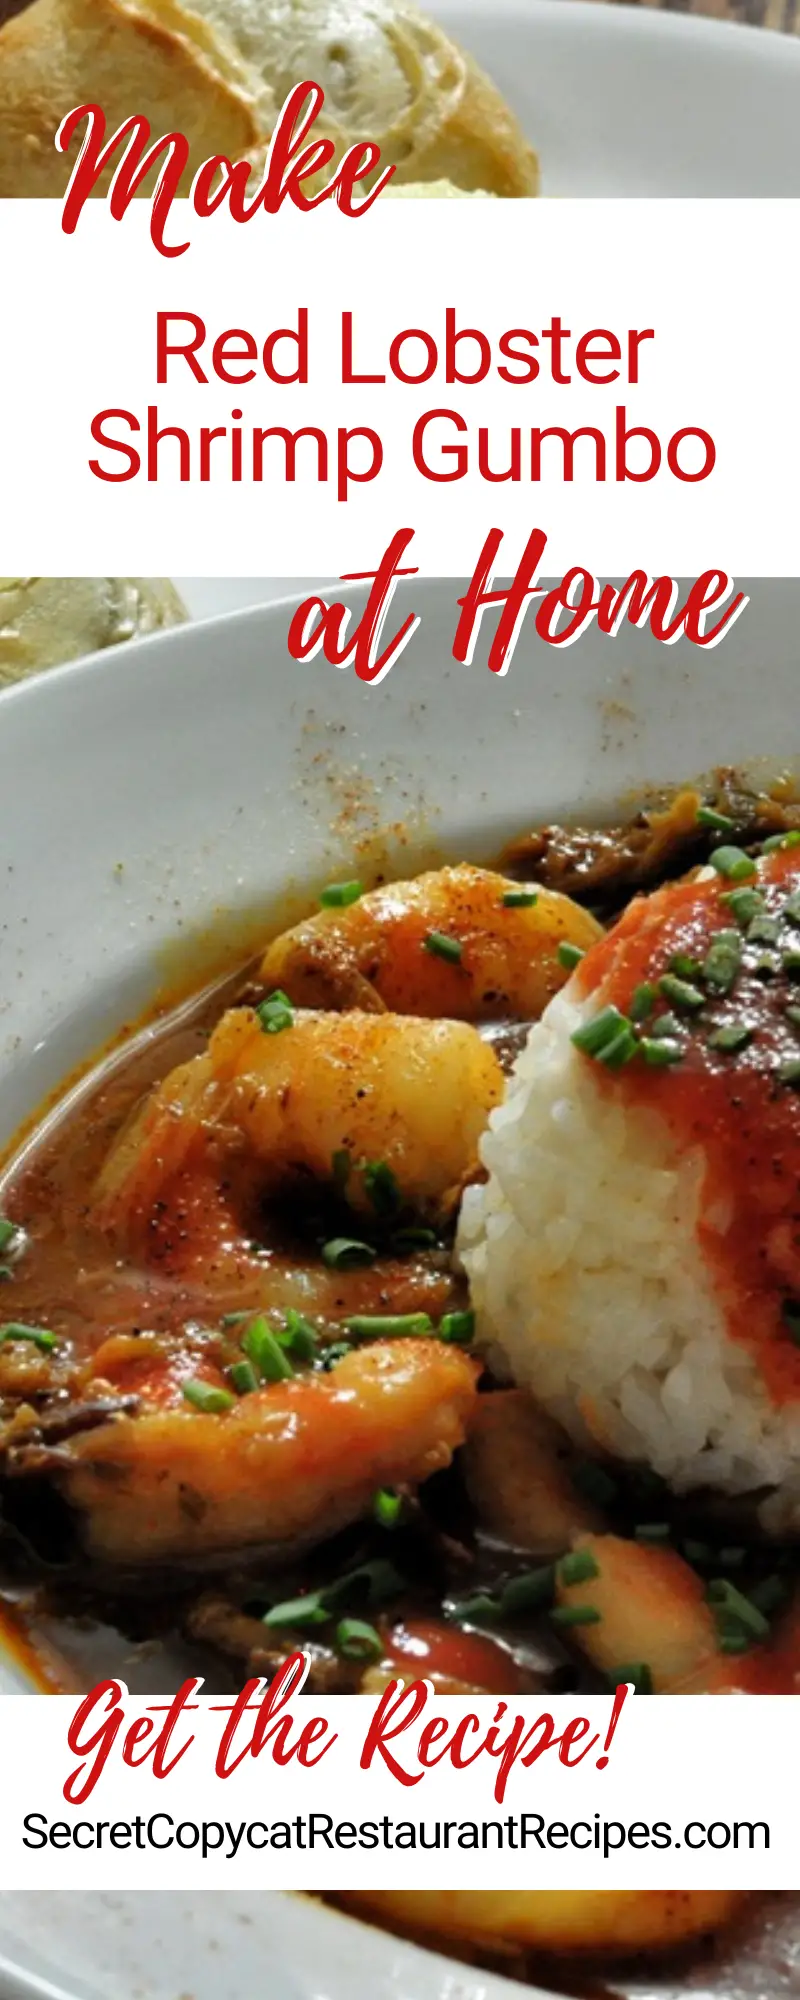 Red Lobster Shrimp Gumbo Recipe